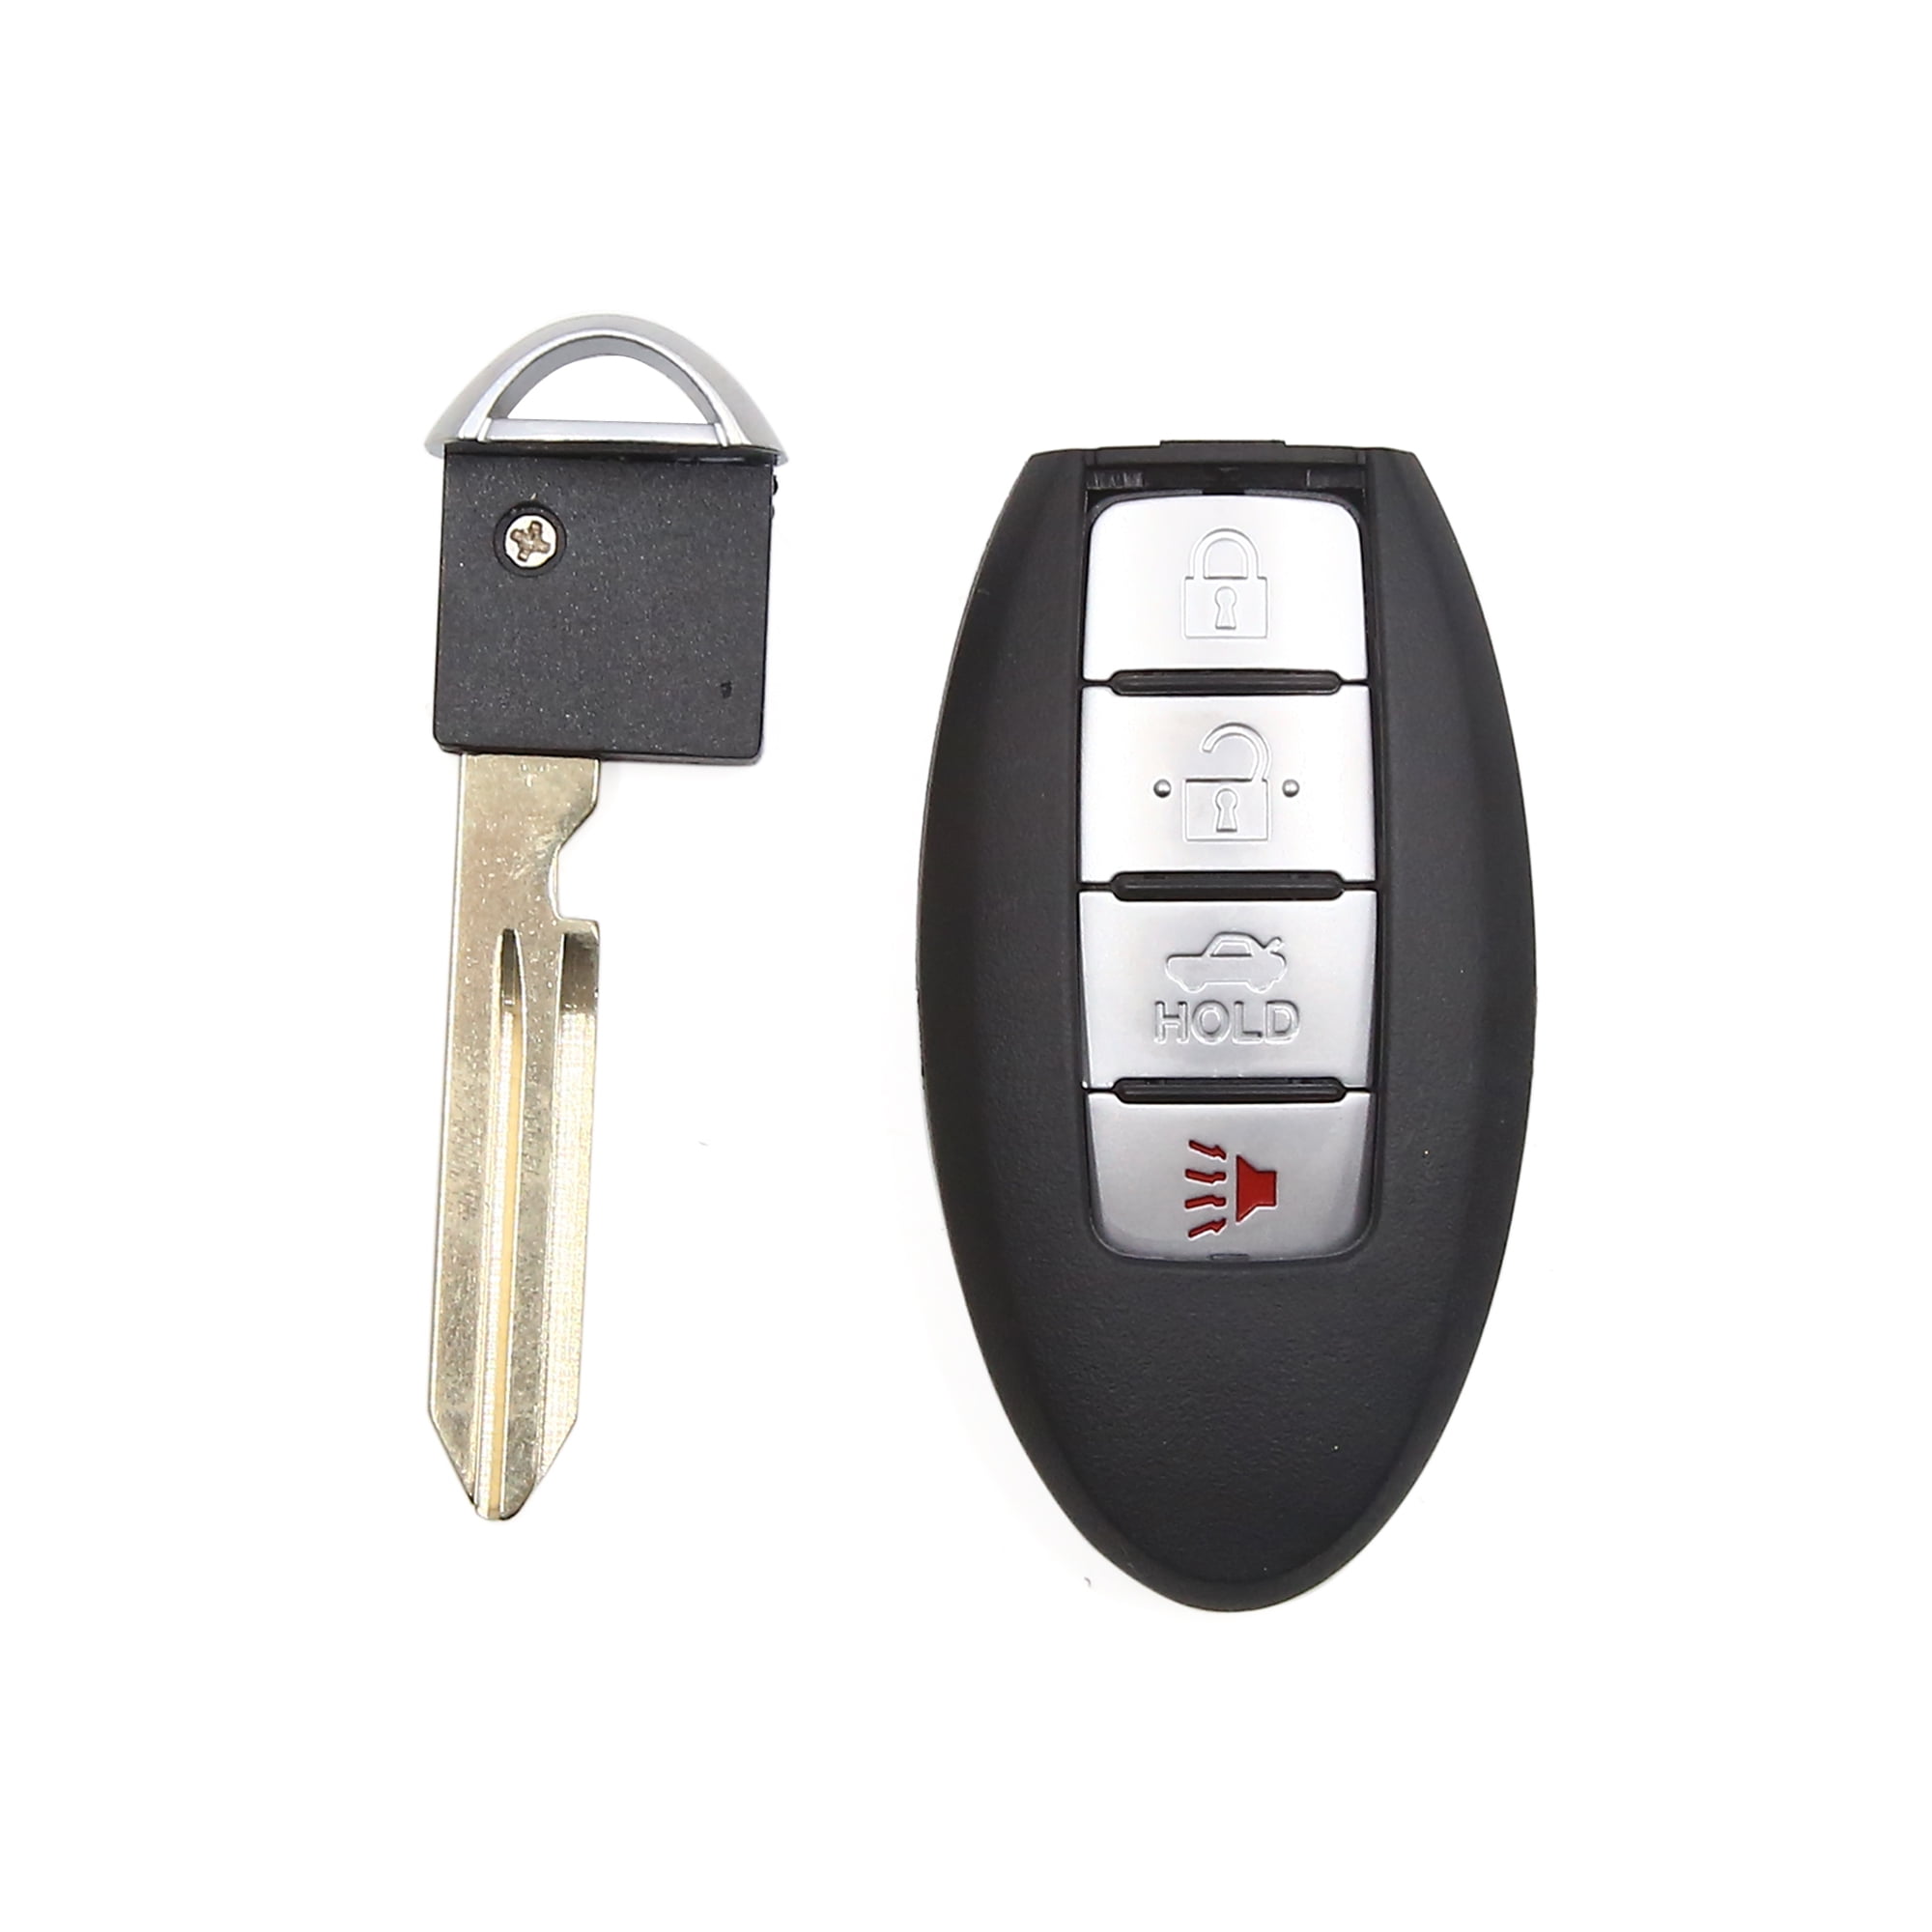 2 For KR55WK48903 Nissan Altima Keyless Entry Smart Prox Remote Car Key Fob 